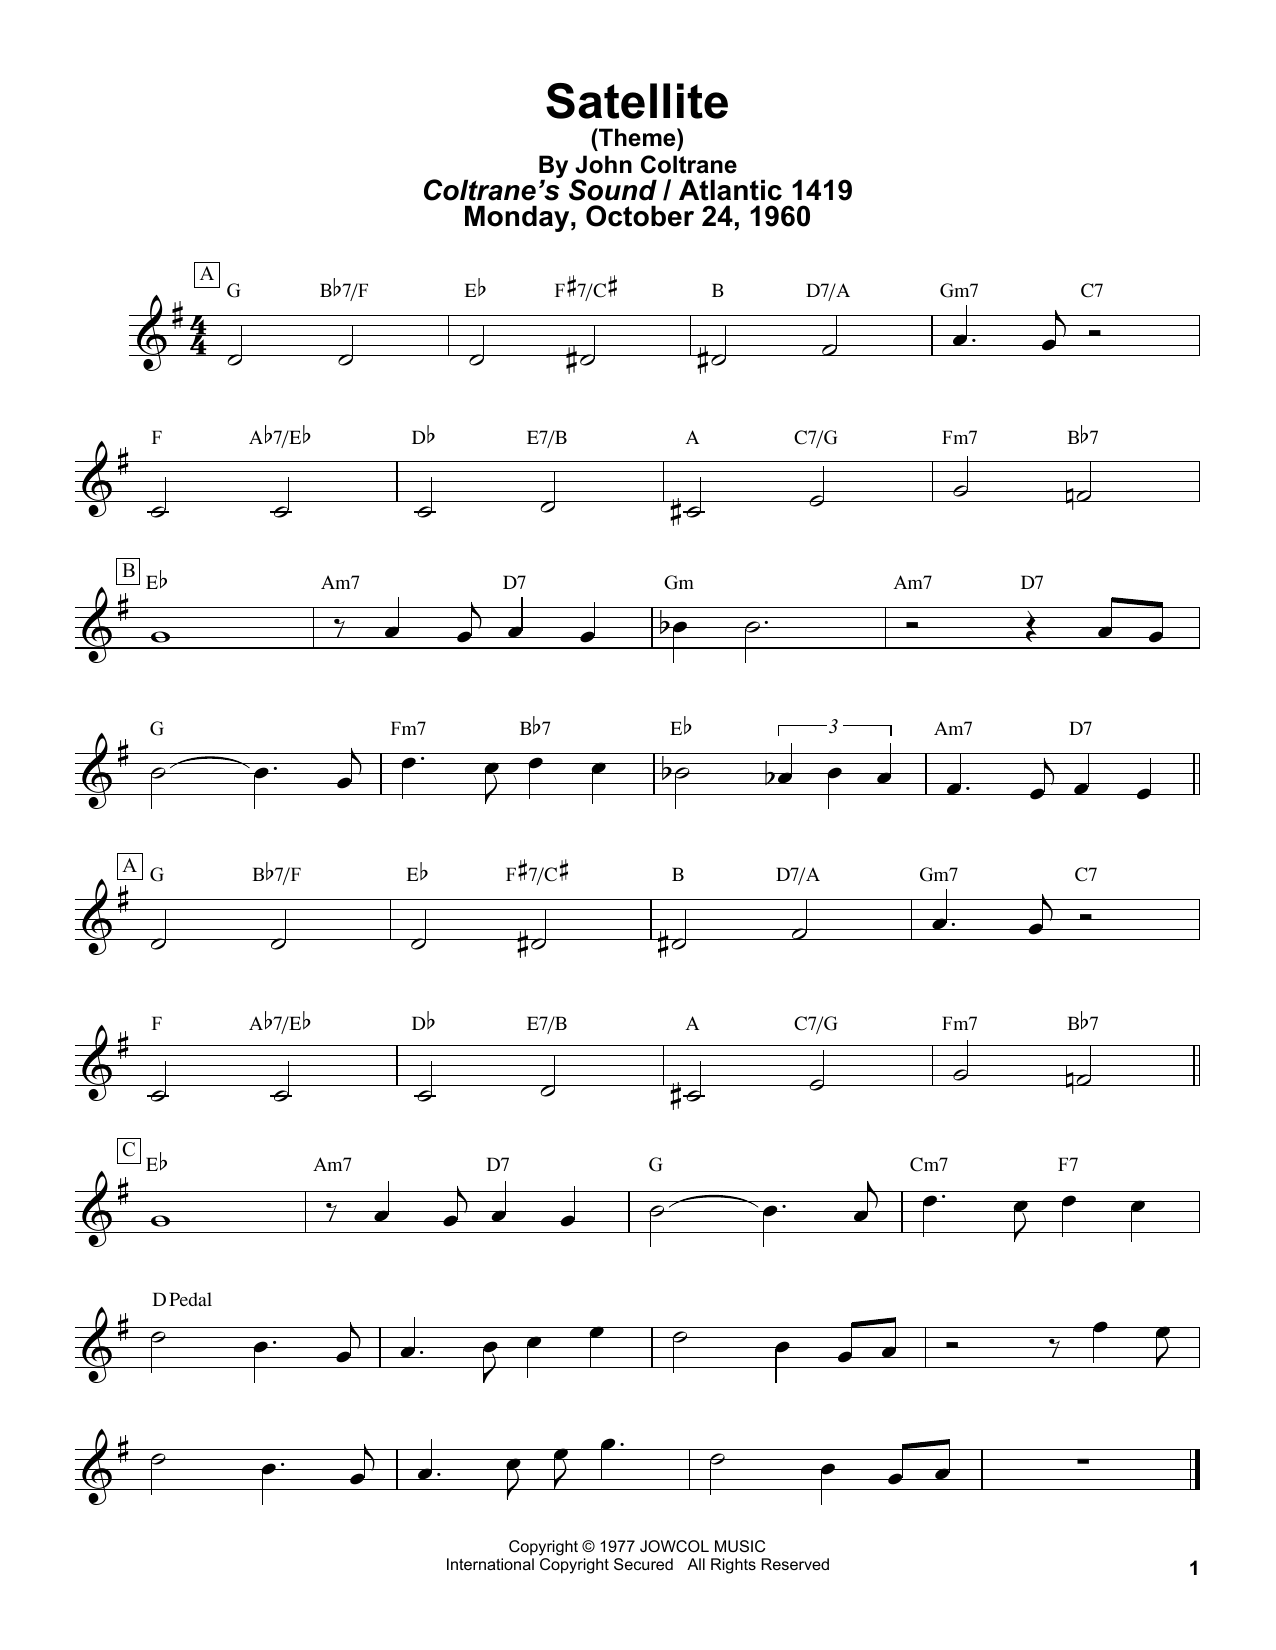 John Coltrane Satellite Sheet Music Notes & Chords for Tenor Sax Transcription - Download or Print PDF